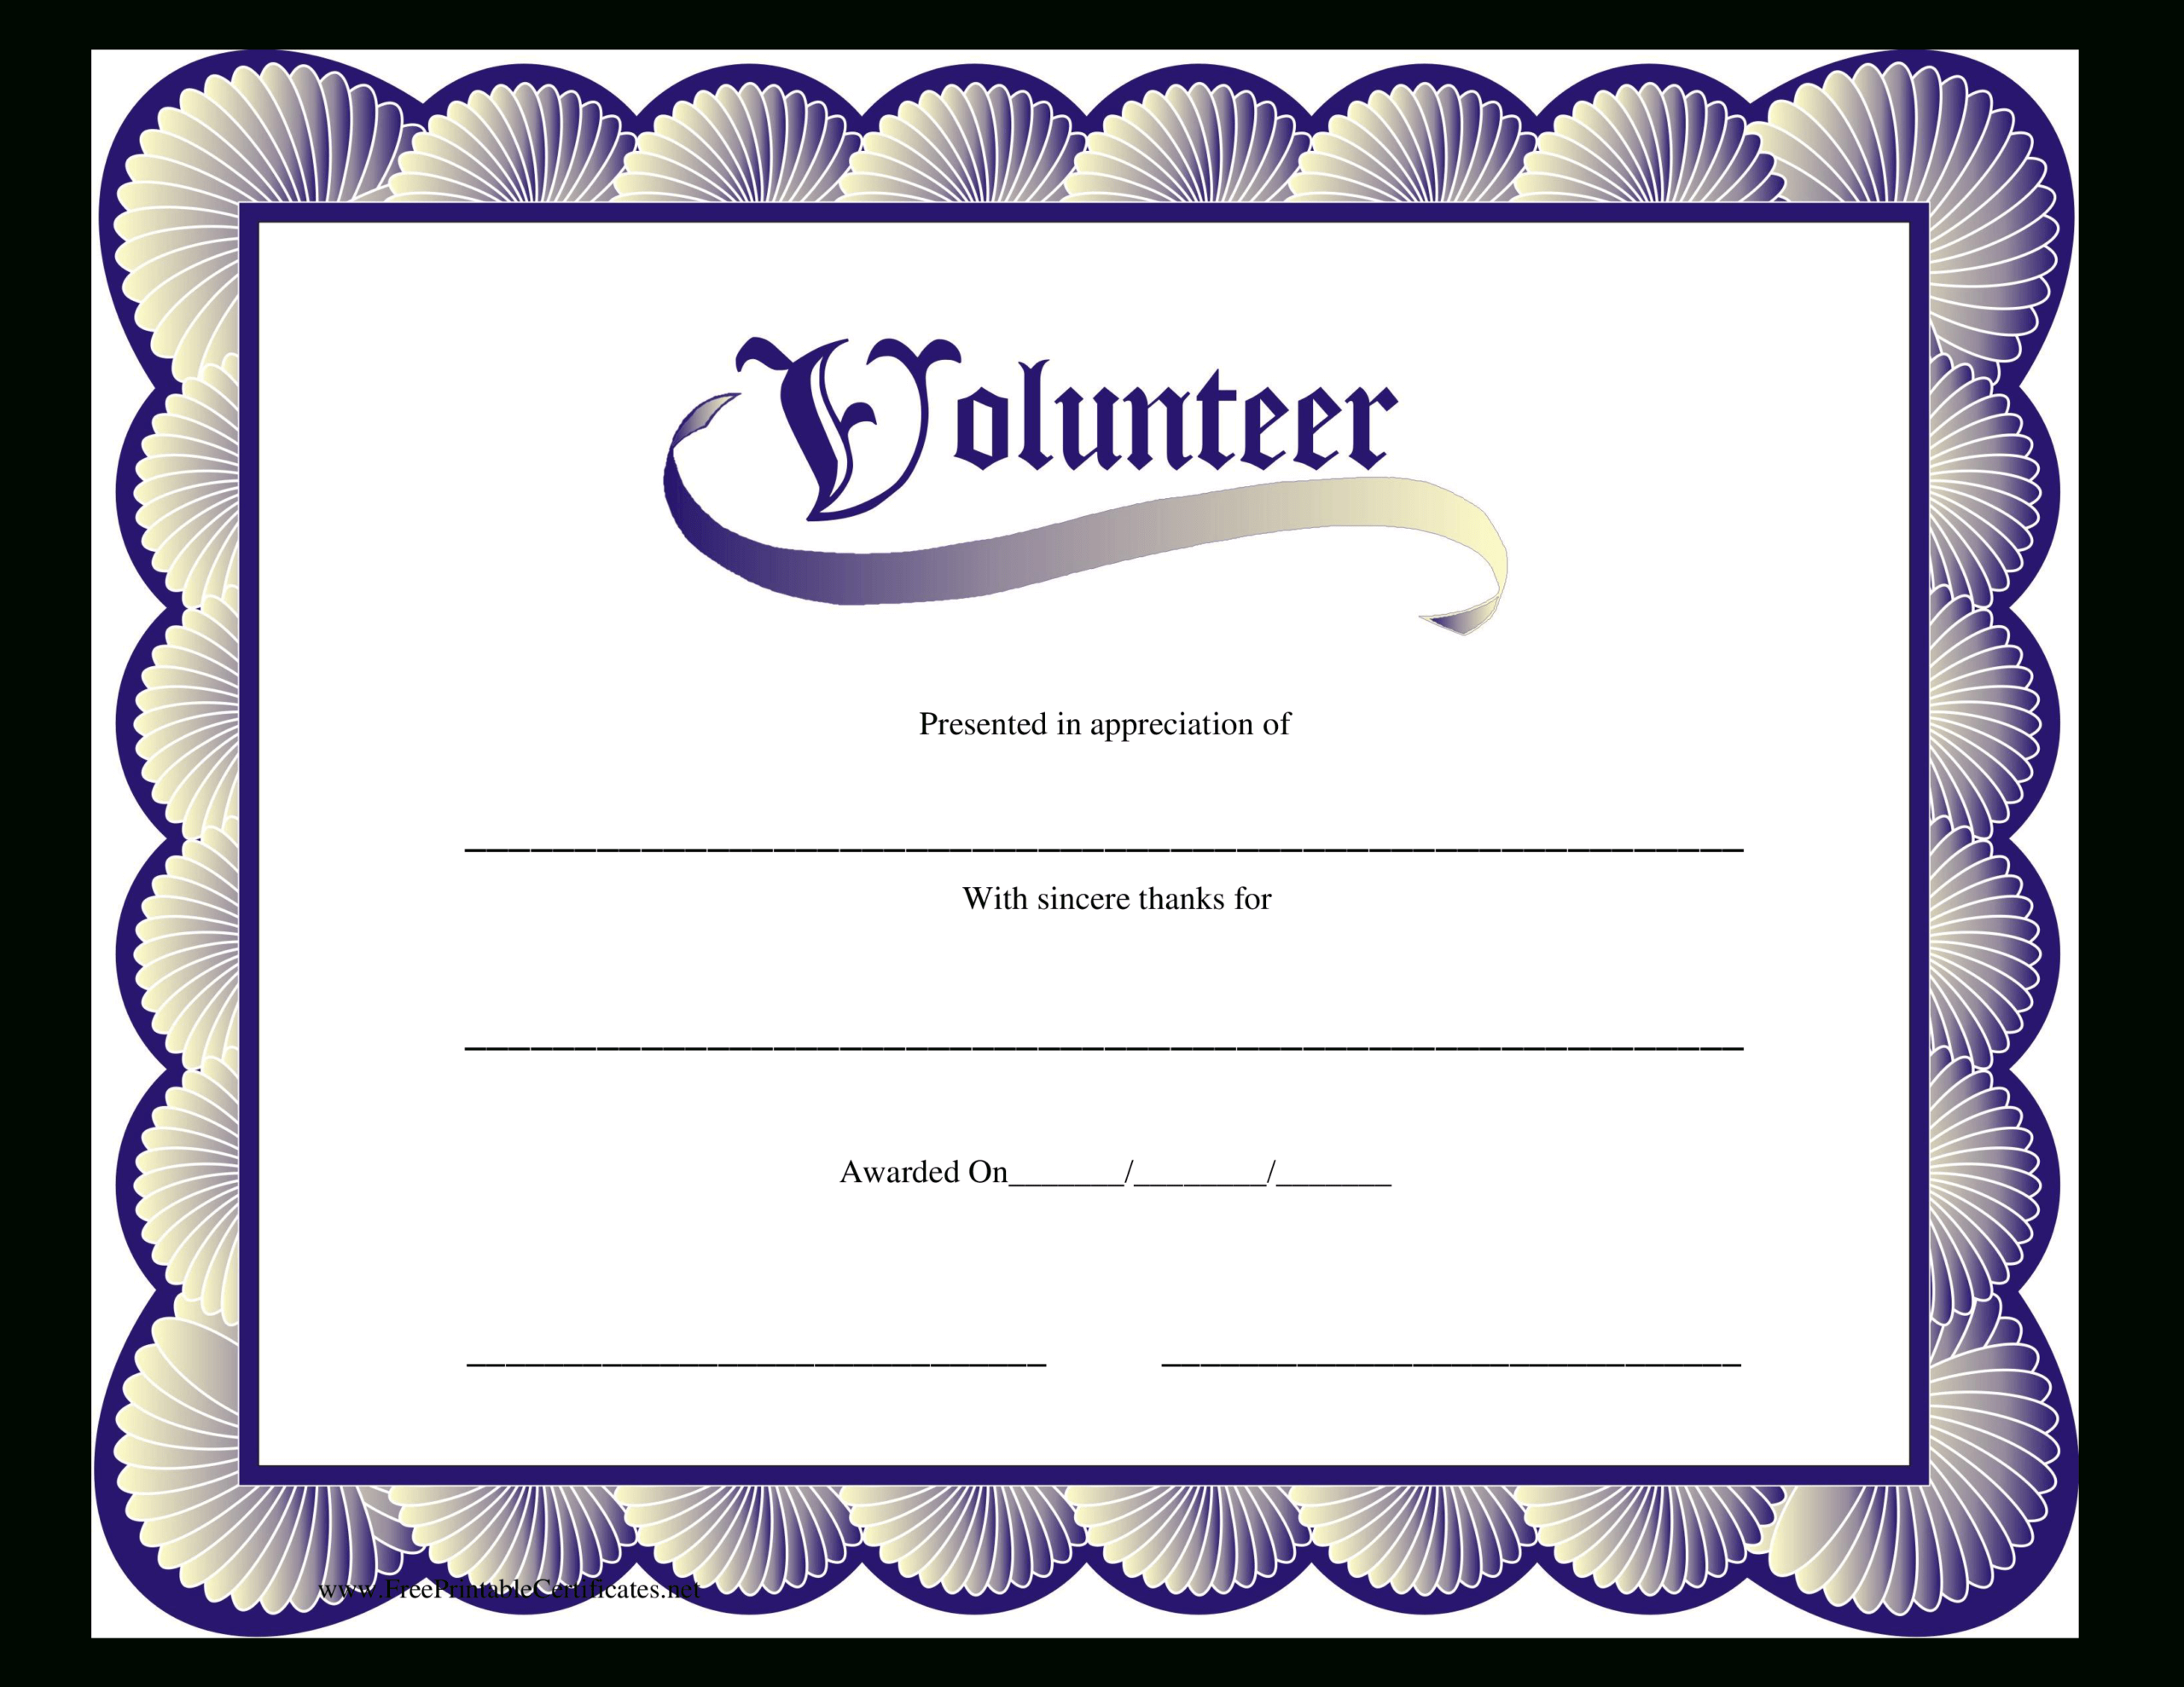 Volunteer Certificate | Templates At Allbusinesstemplates Inside Volunteer Certificate Template